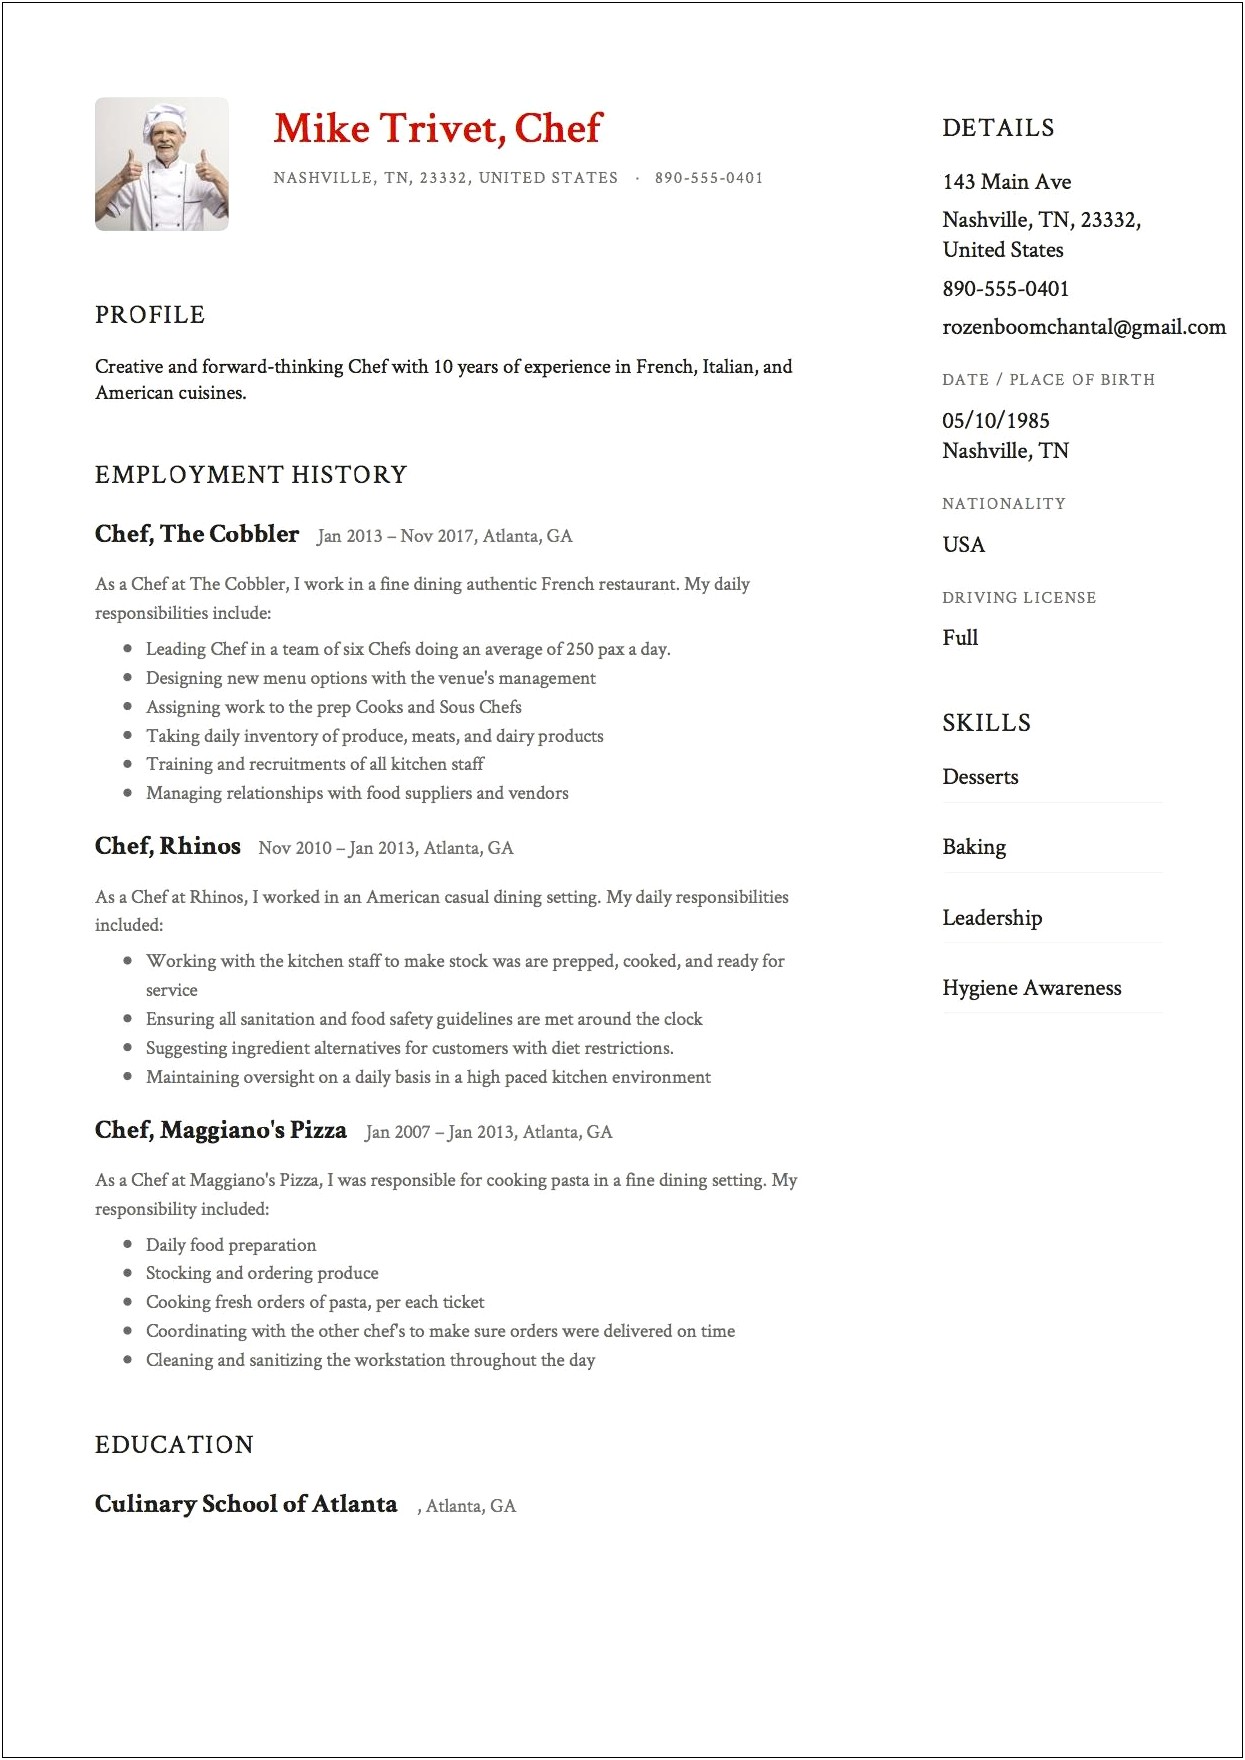 Panera Bread Associate Job Description For Resume